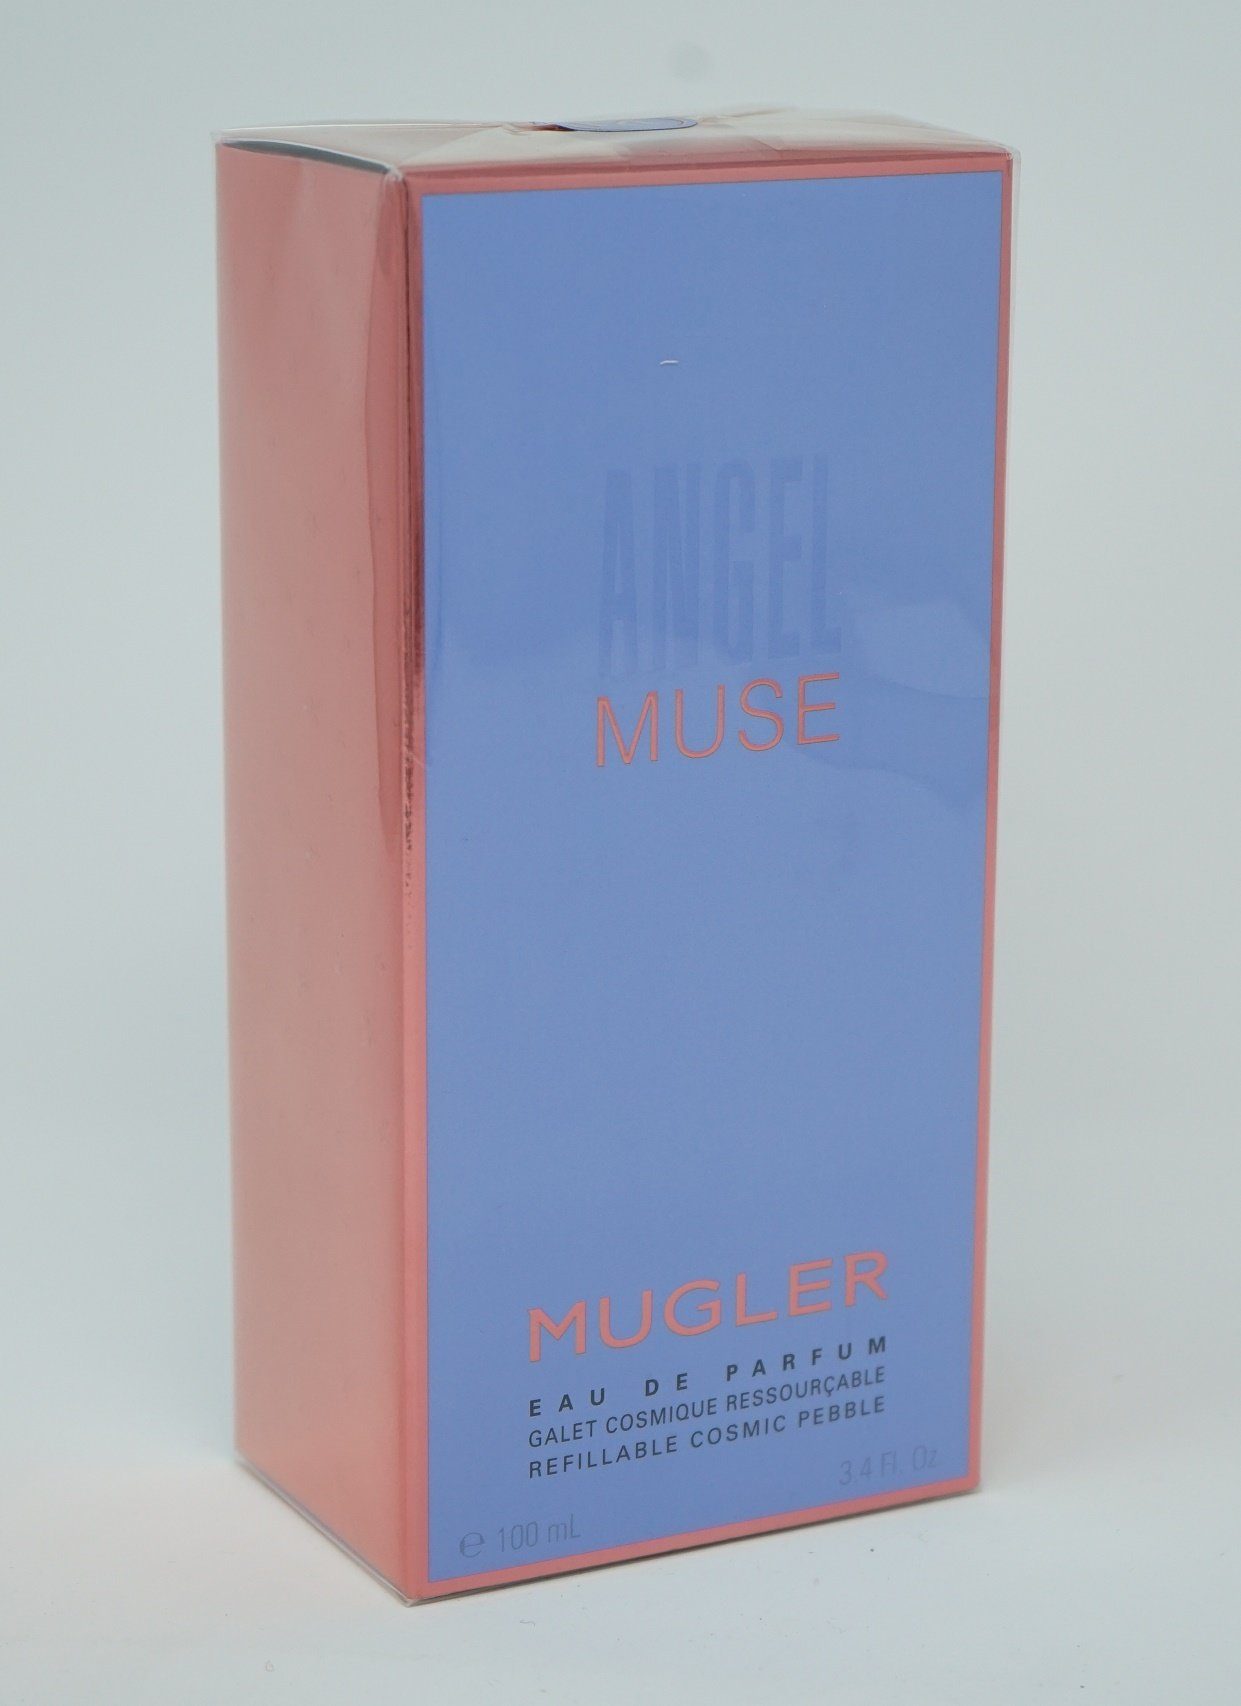 Thierry Thierry de Reffilable Mugler 100ml Muse Eau Mugler de Angel Eau parfum Parfum